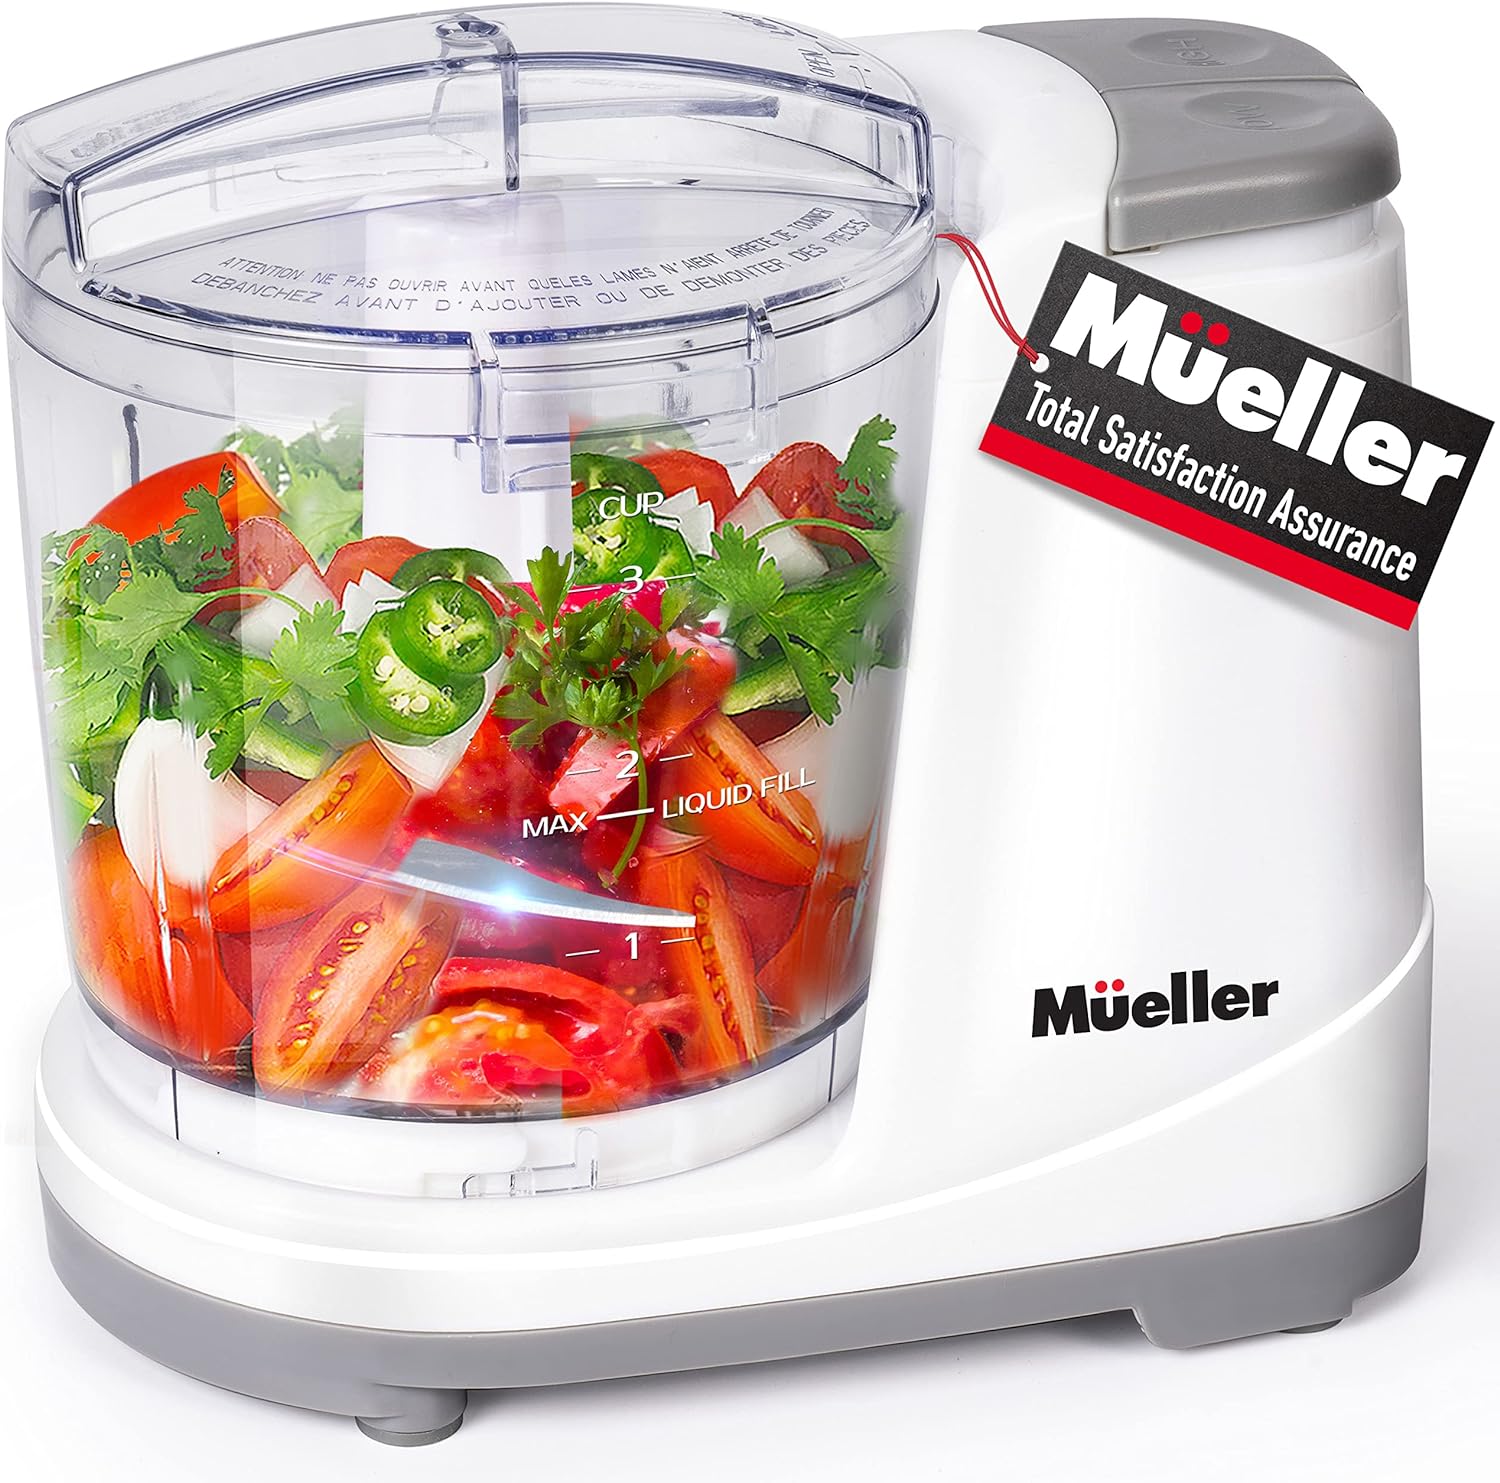 Mueller Home Mueller Electric Food Chopper, Mini Food Processor, 3-Cup